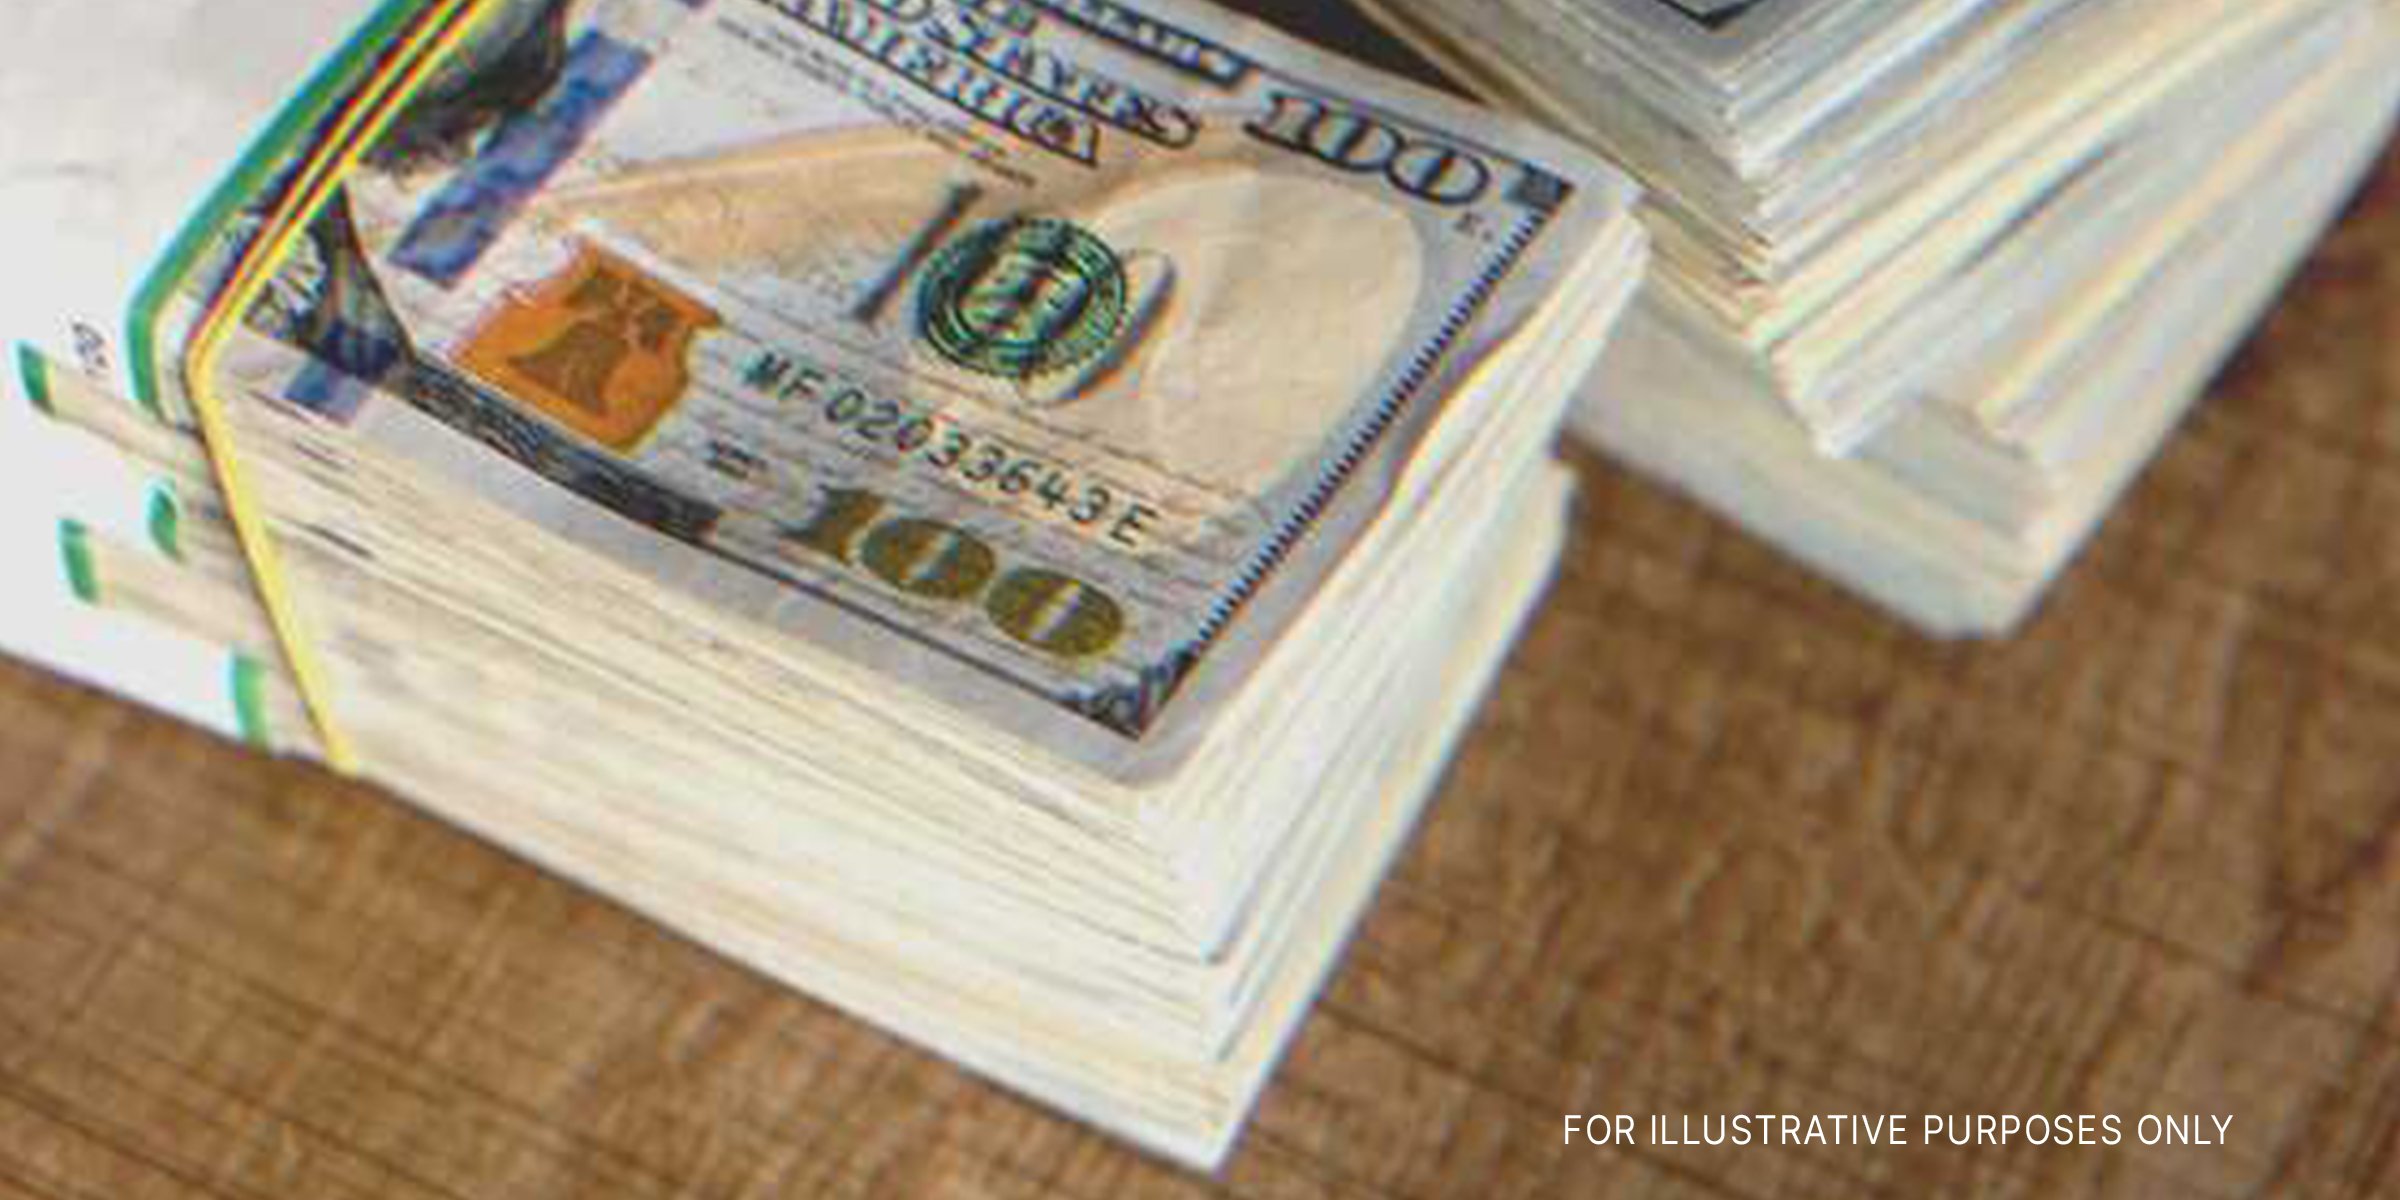 Wad of cash | Source: Shutterstock